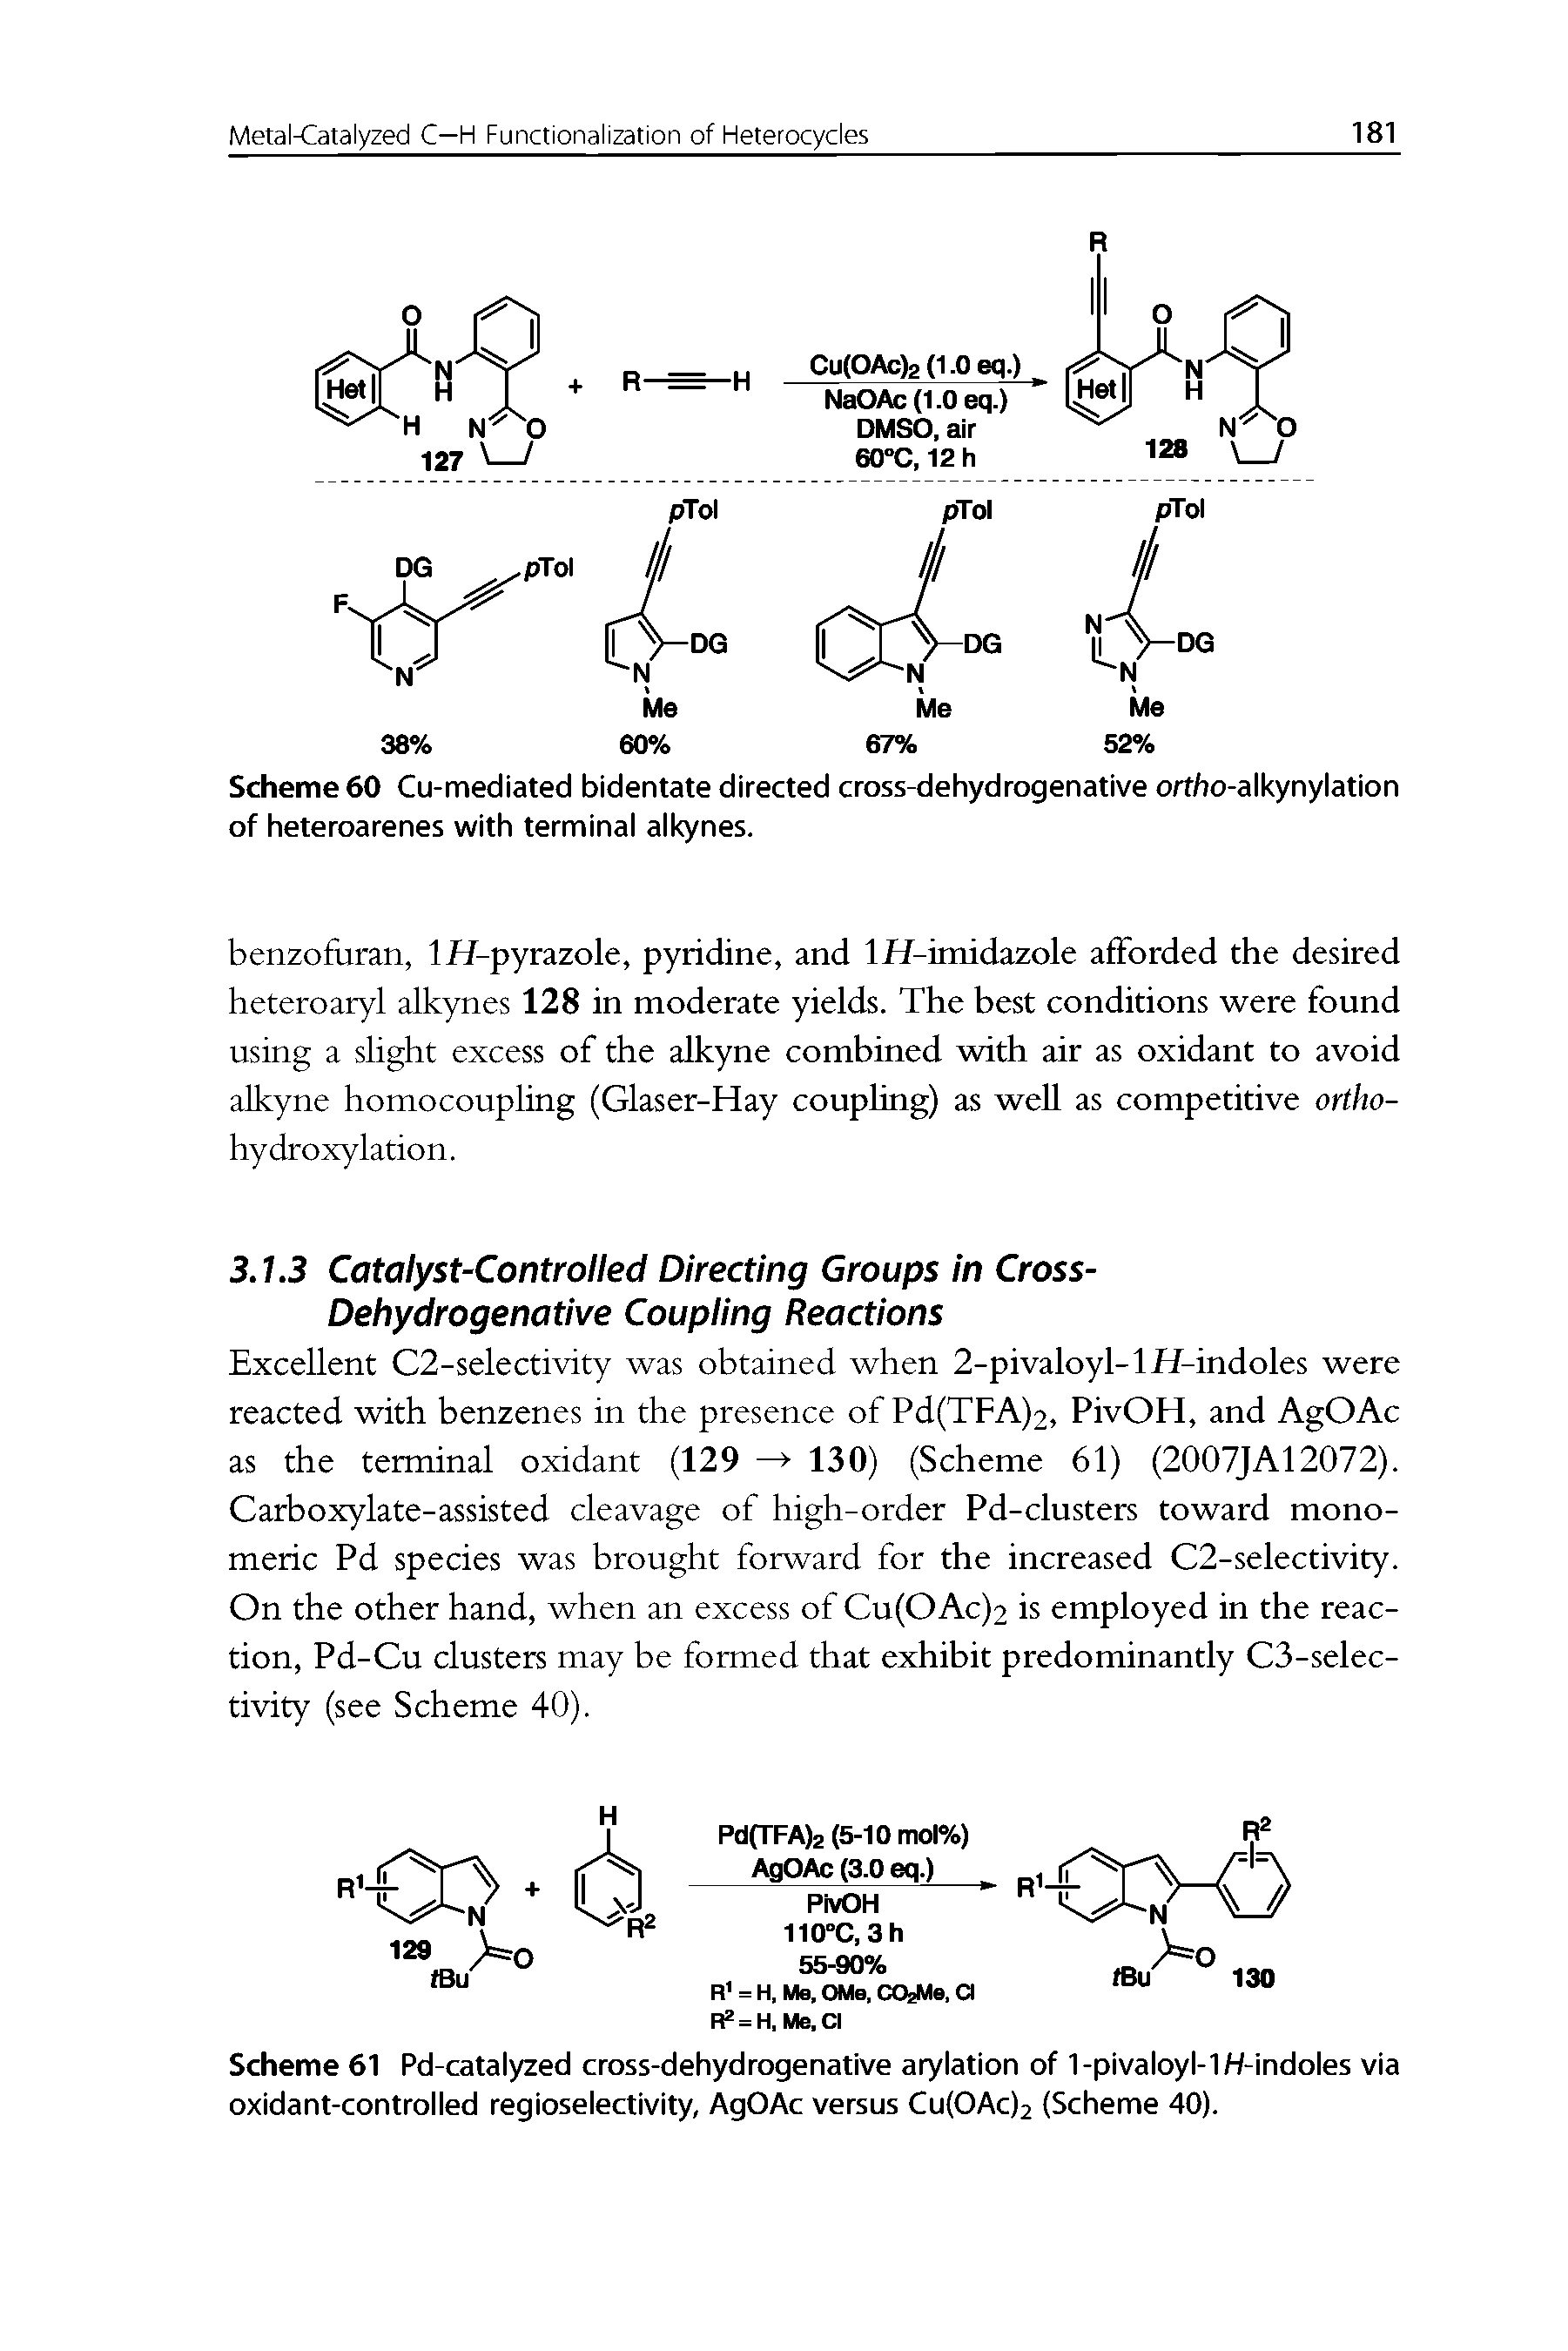 Scheme 60 Cu-mediated bidentate directed cross-dehydrogenative ortho-alkynylation of heteroarenes with terminal alkynes.